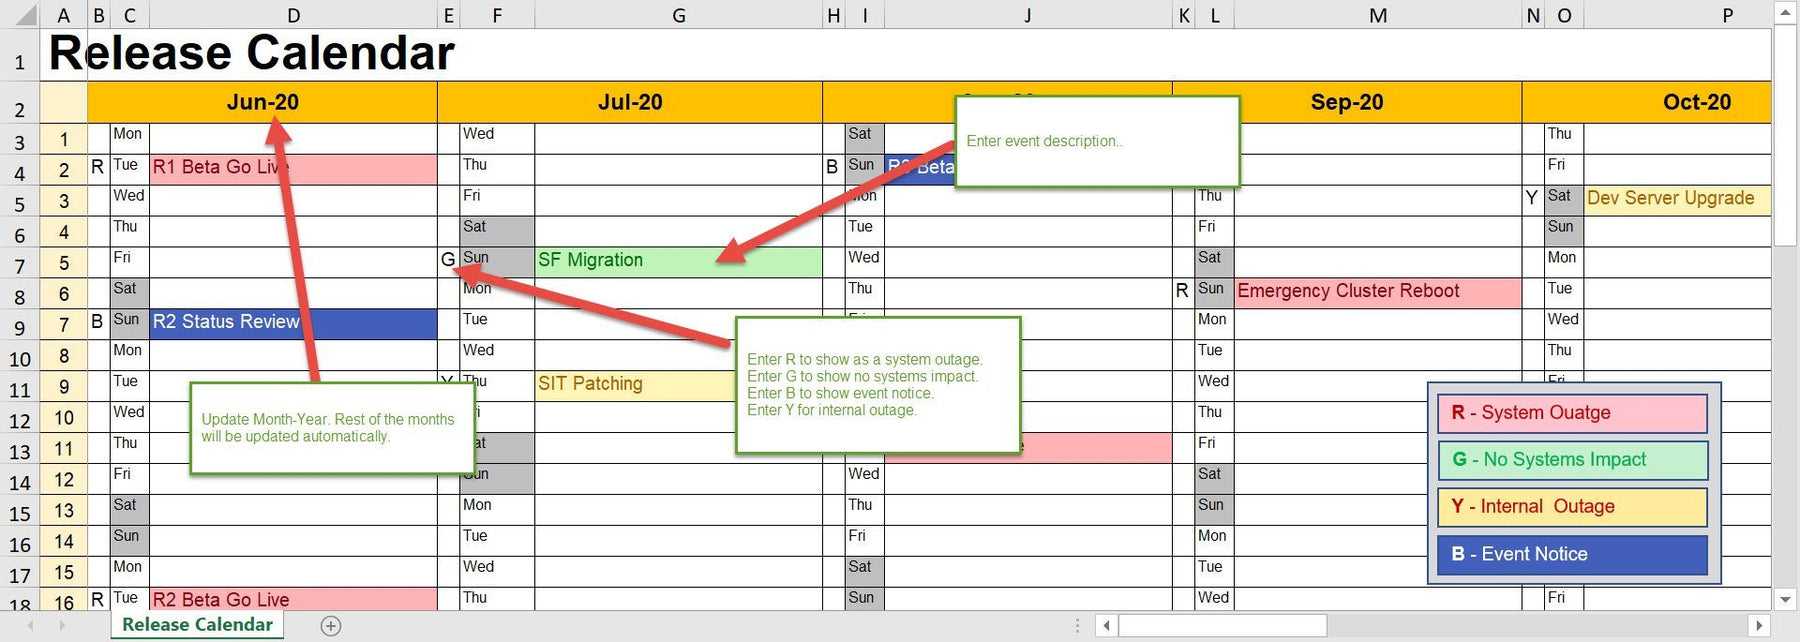 Release Calendar Template Excel Template ITSM Docs ITSM Documents